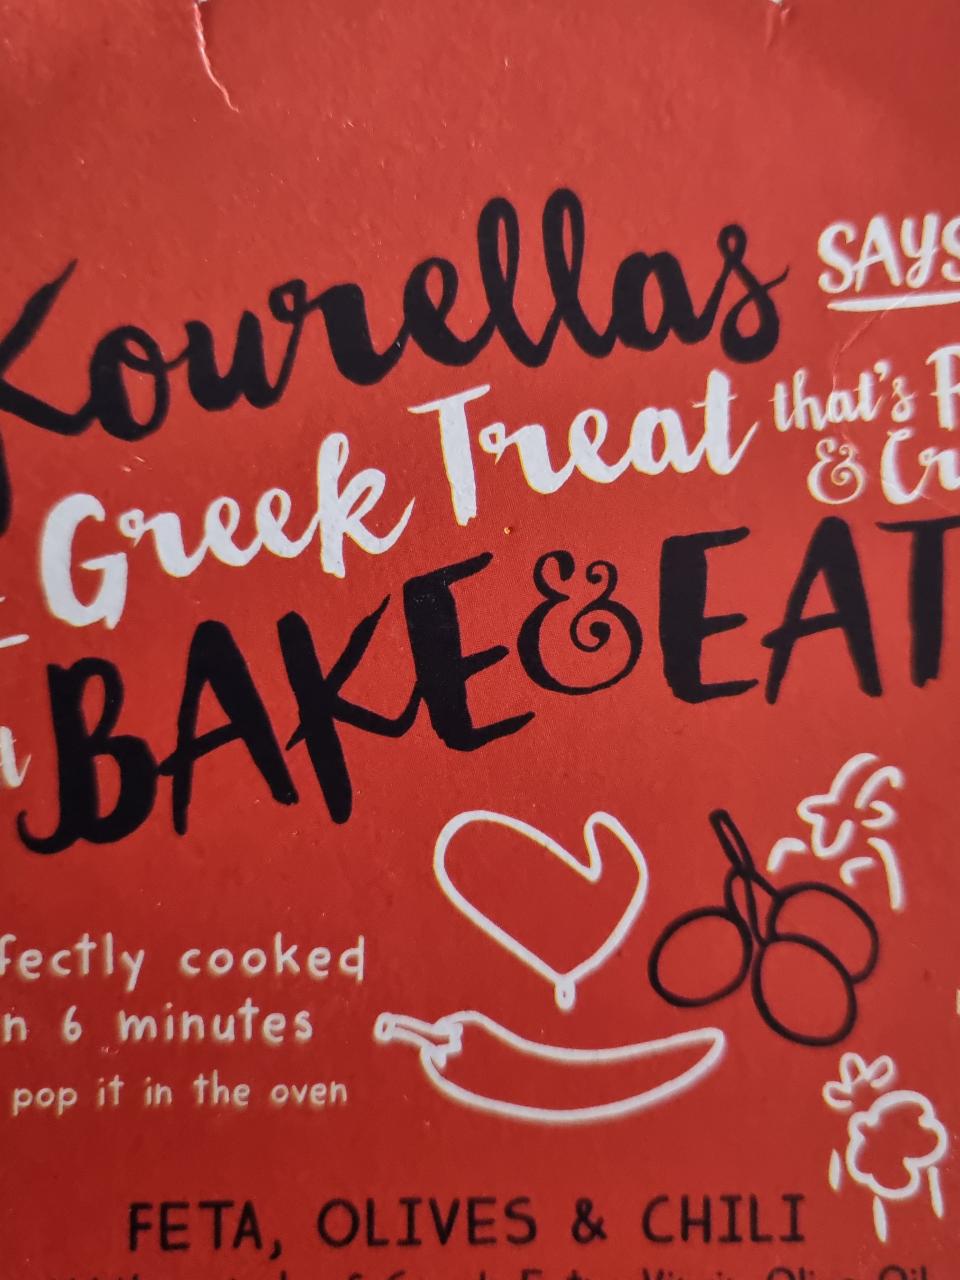 Fotografie - kourellas greek treat bake & eat